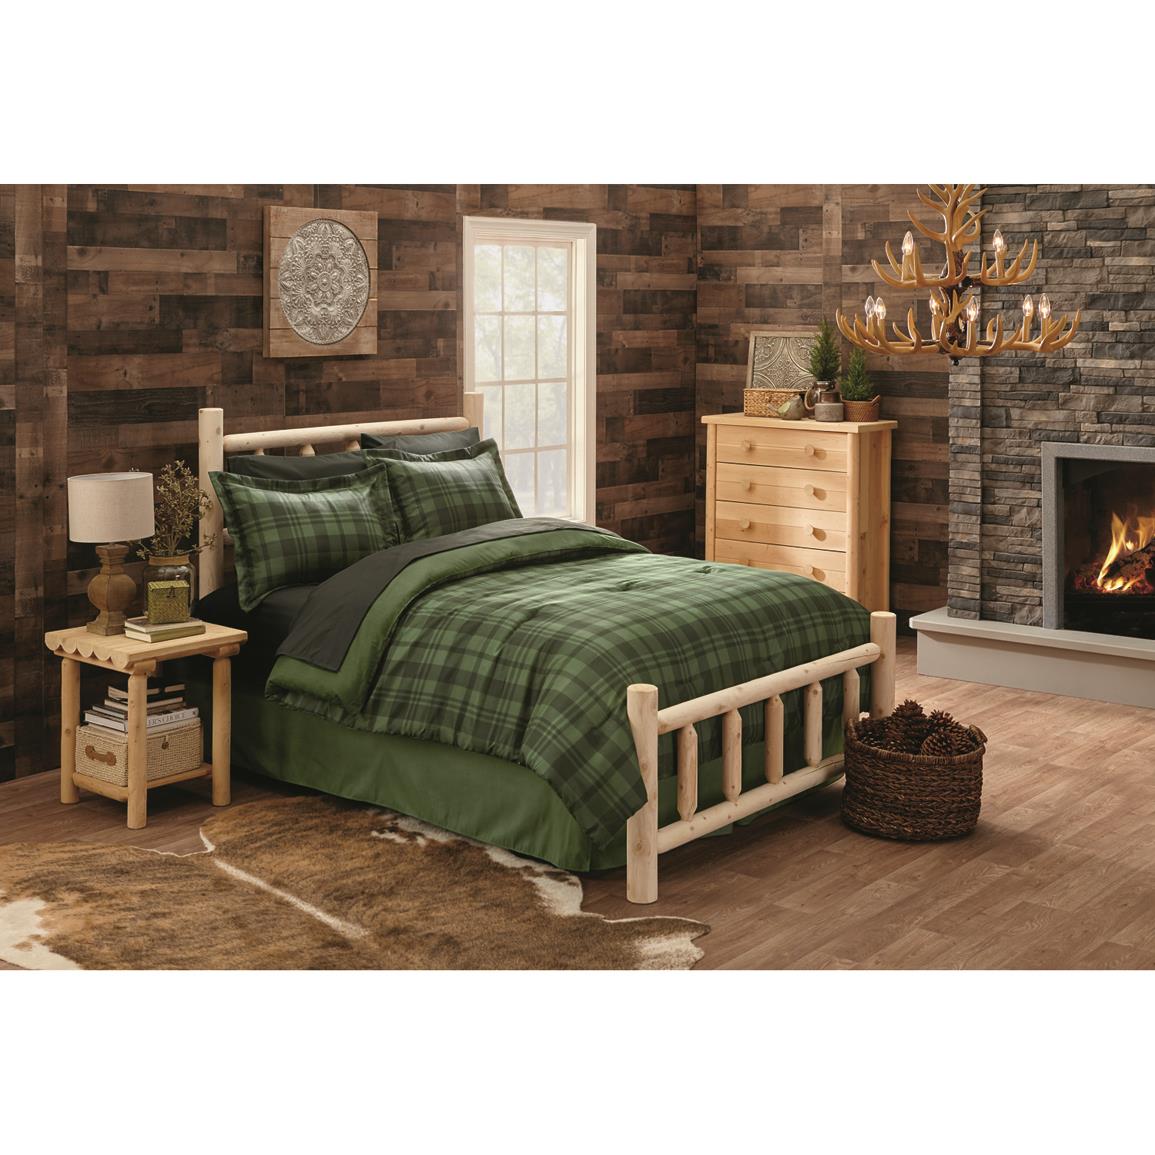 CASTLECREEK Cedar Log Bed, Full